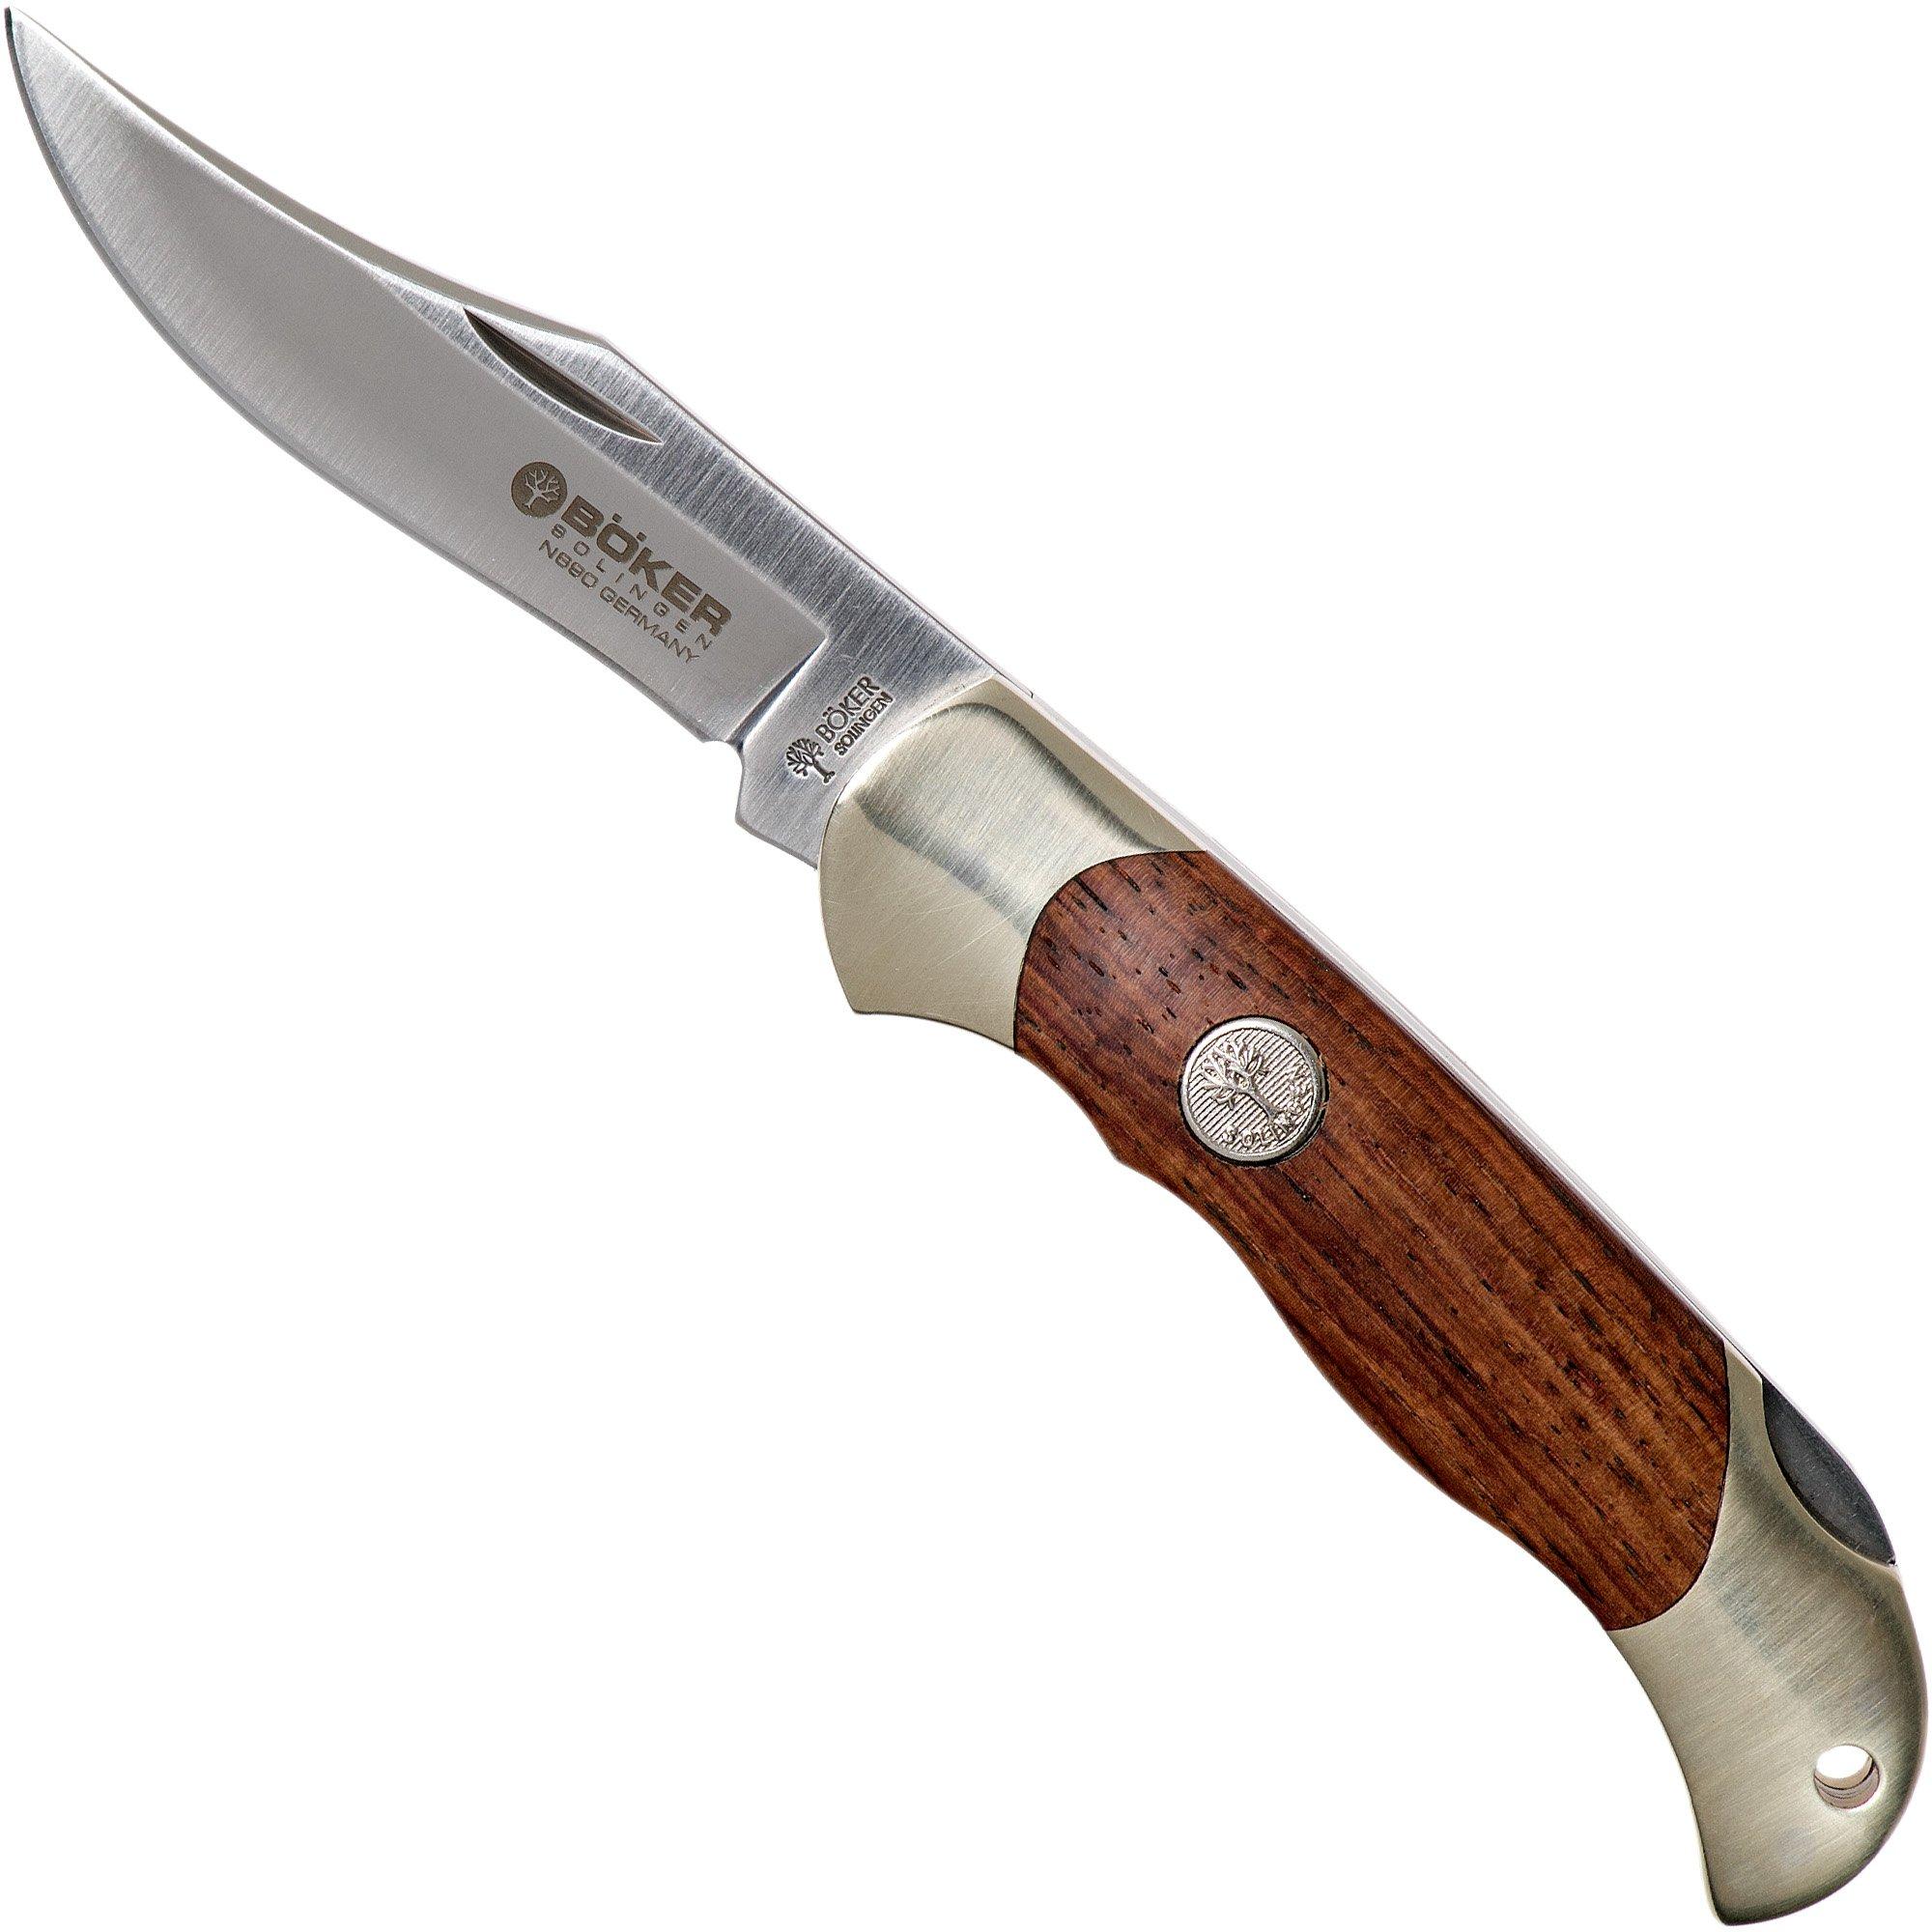 Böker Junior Scout 111930 Rosewood, dagger  Advantageously shopping at